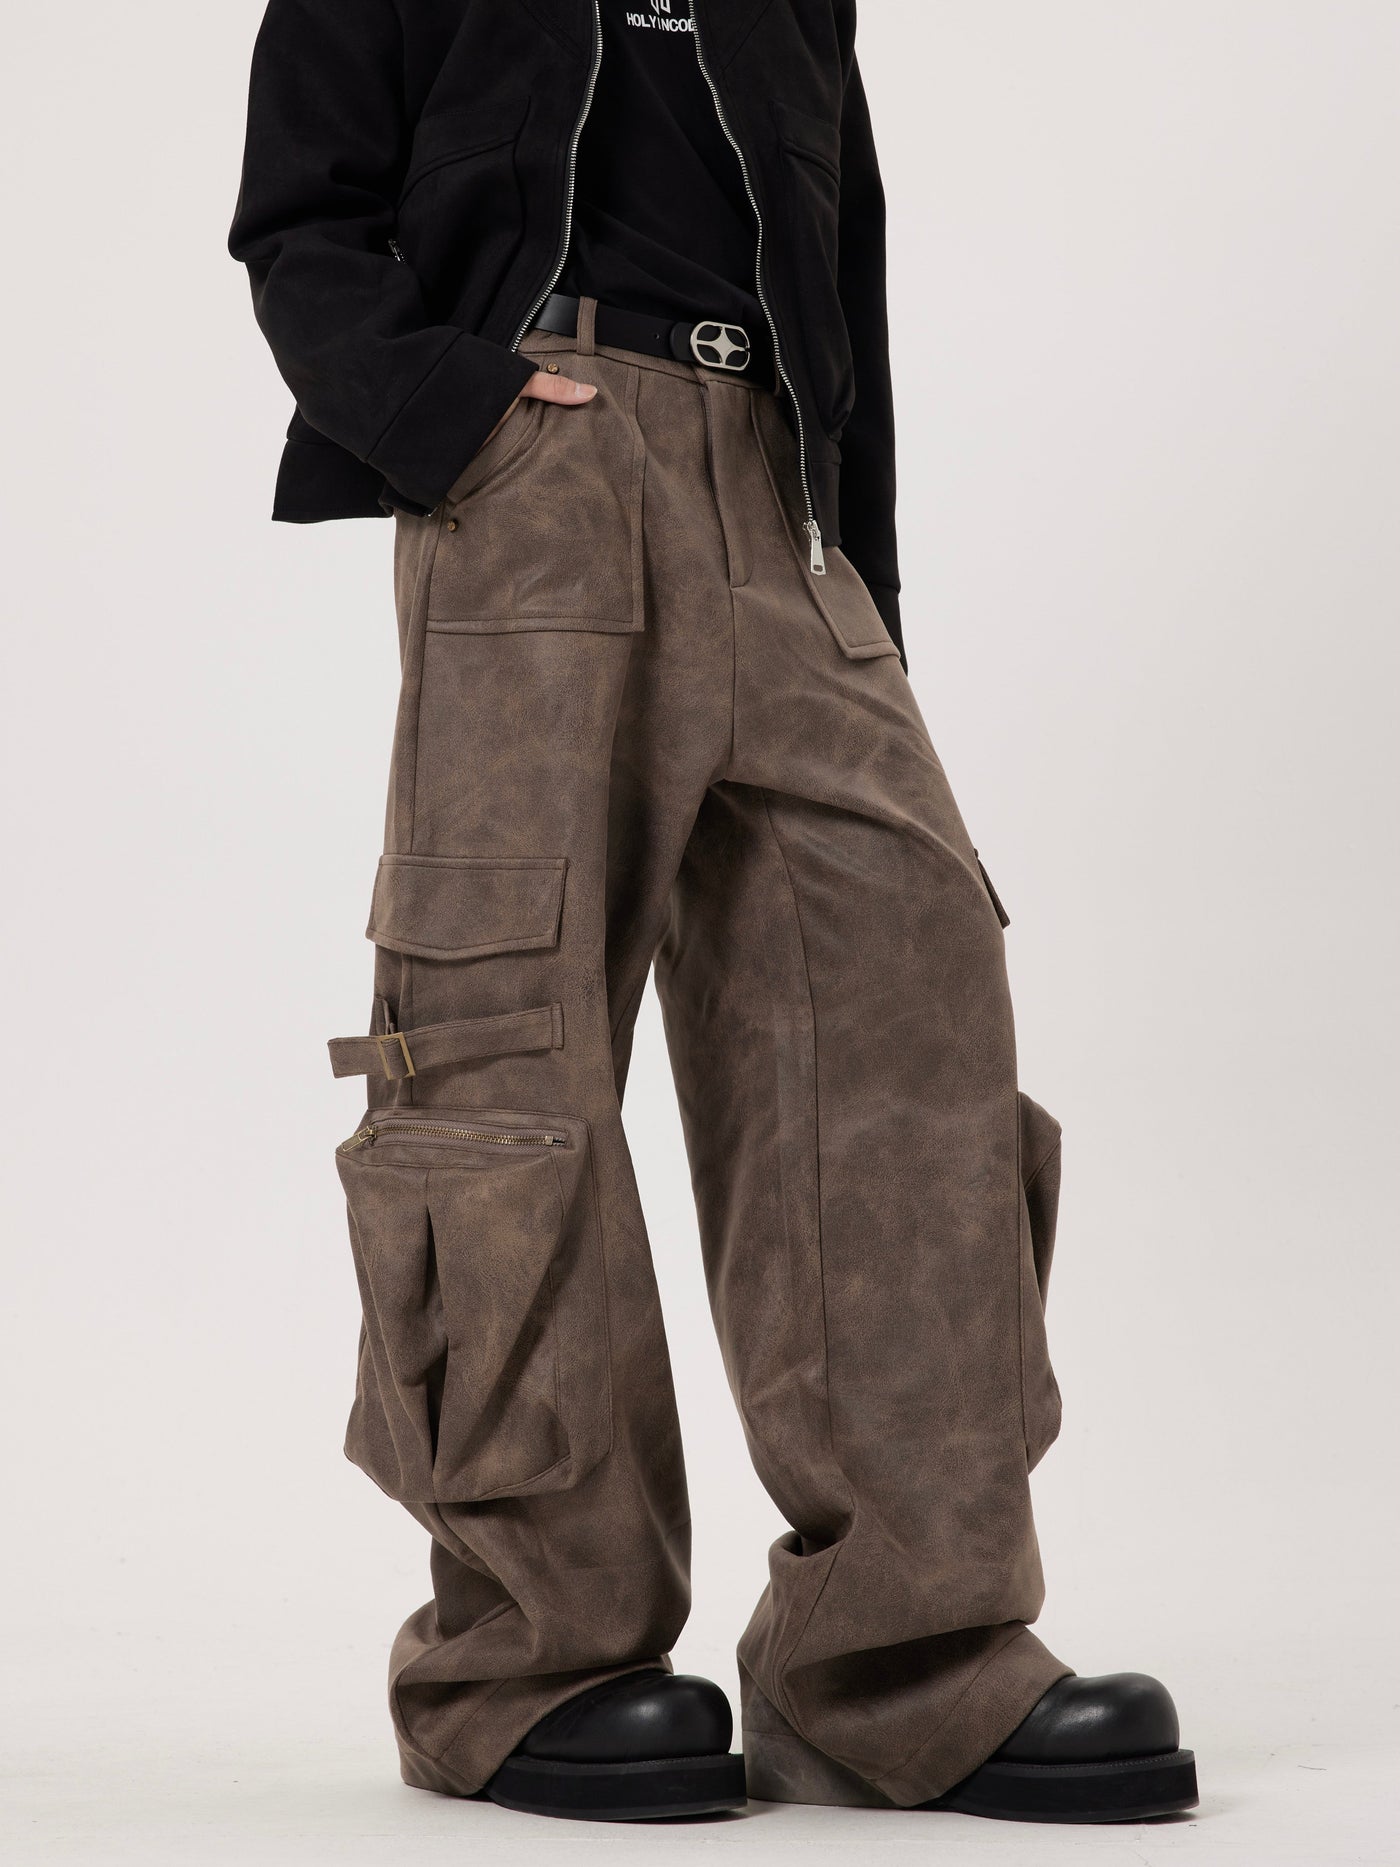 Dark Fog Washed Buckle Strap Cargo Leather Pants Korean Street Fashion Pants By Dark Fog Shop Online at OH Vault